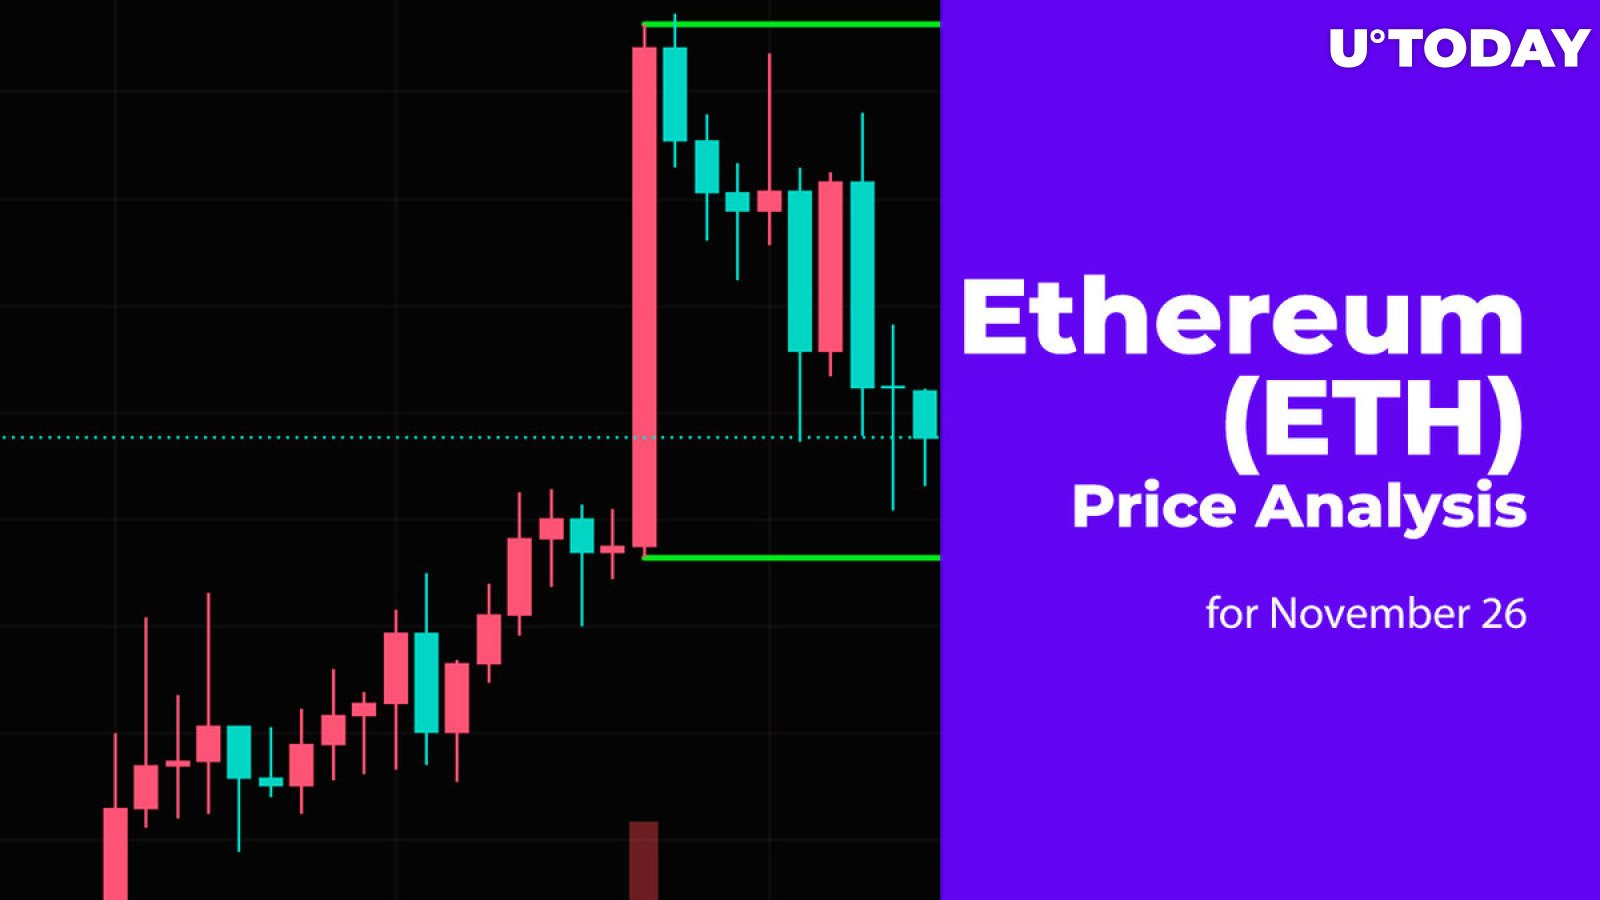 Ethereum (ETH) Price Analysis for November 26